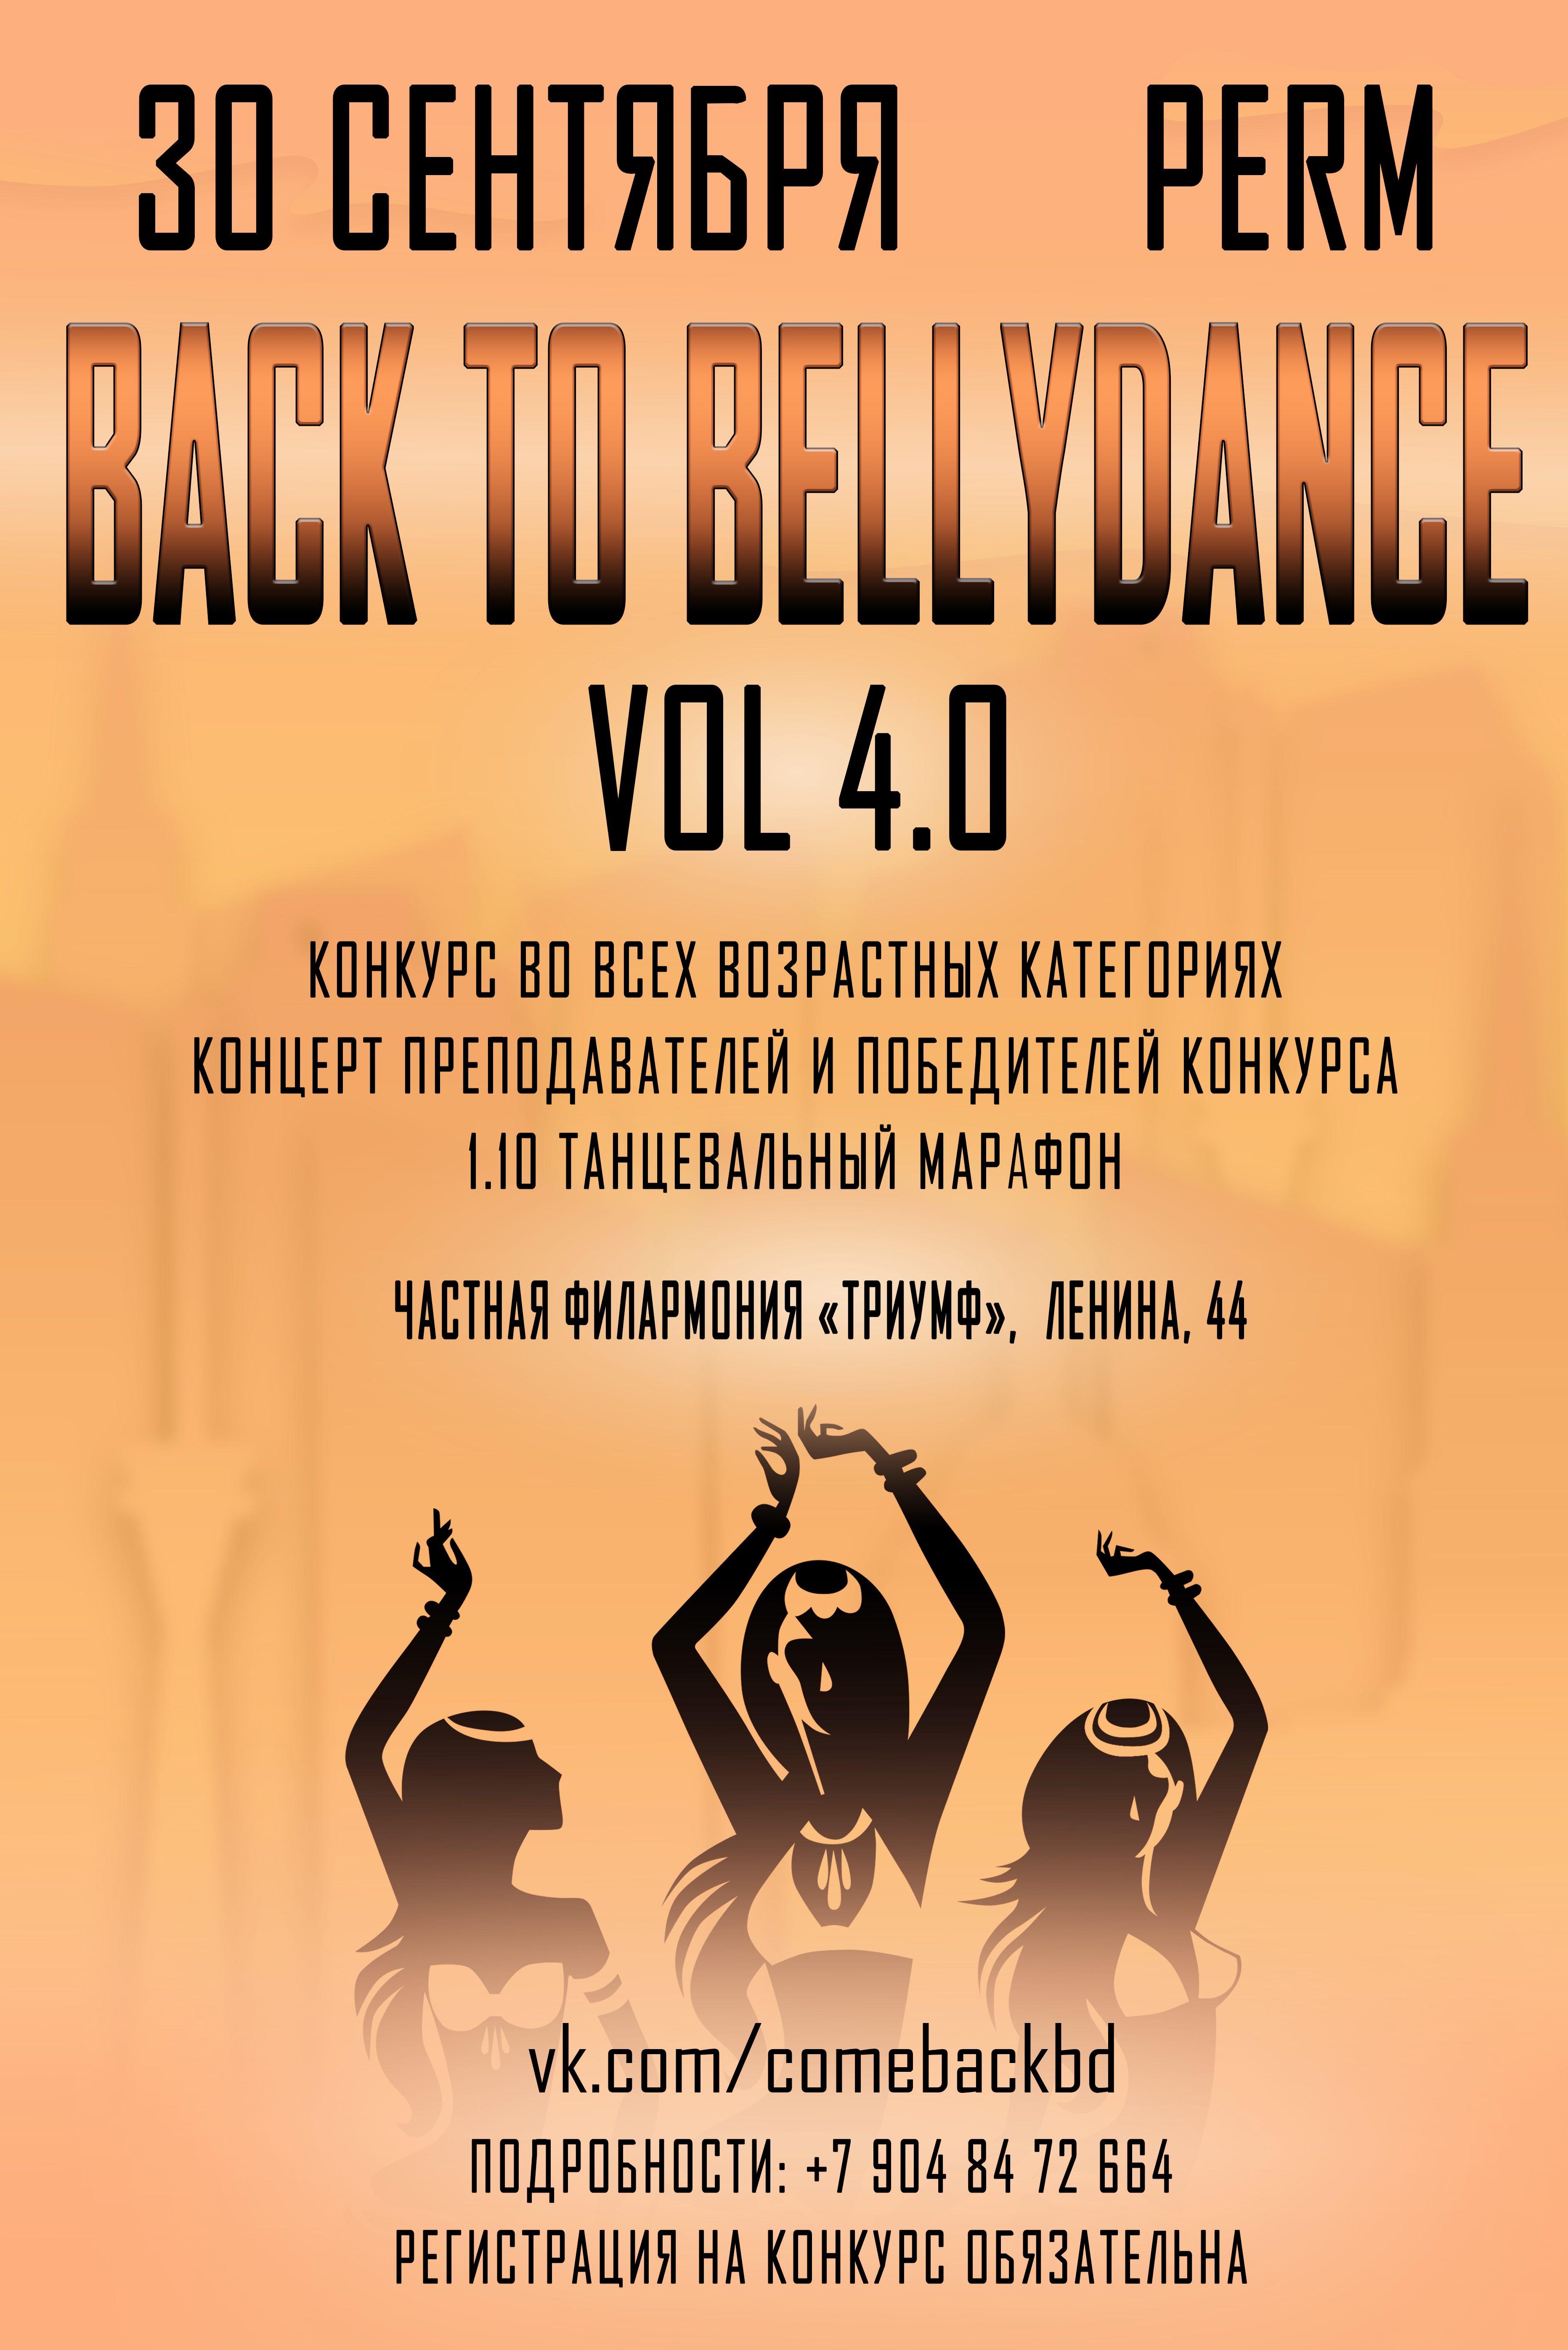 Back to bellydance Vol 4